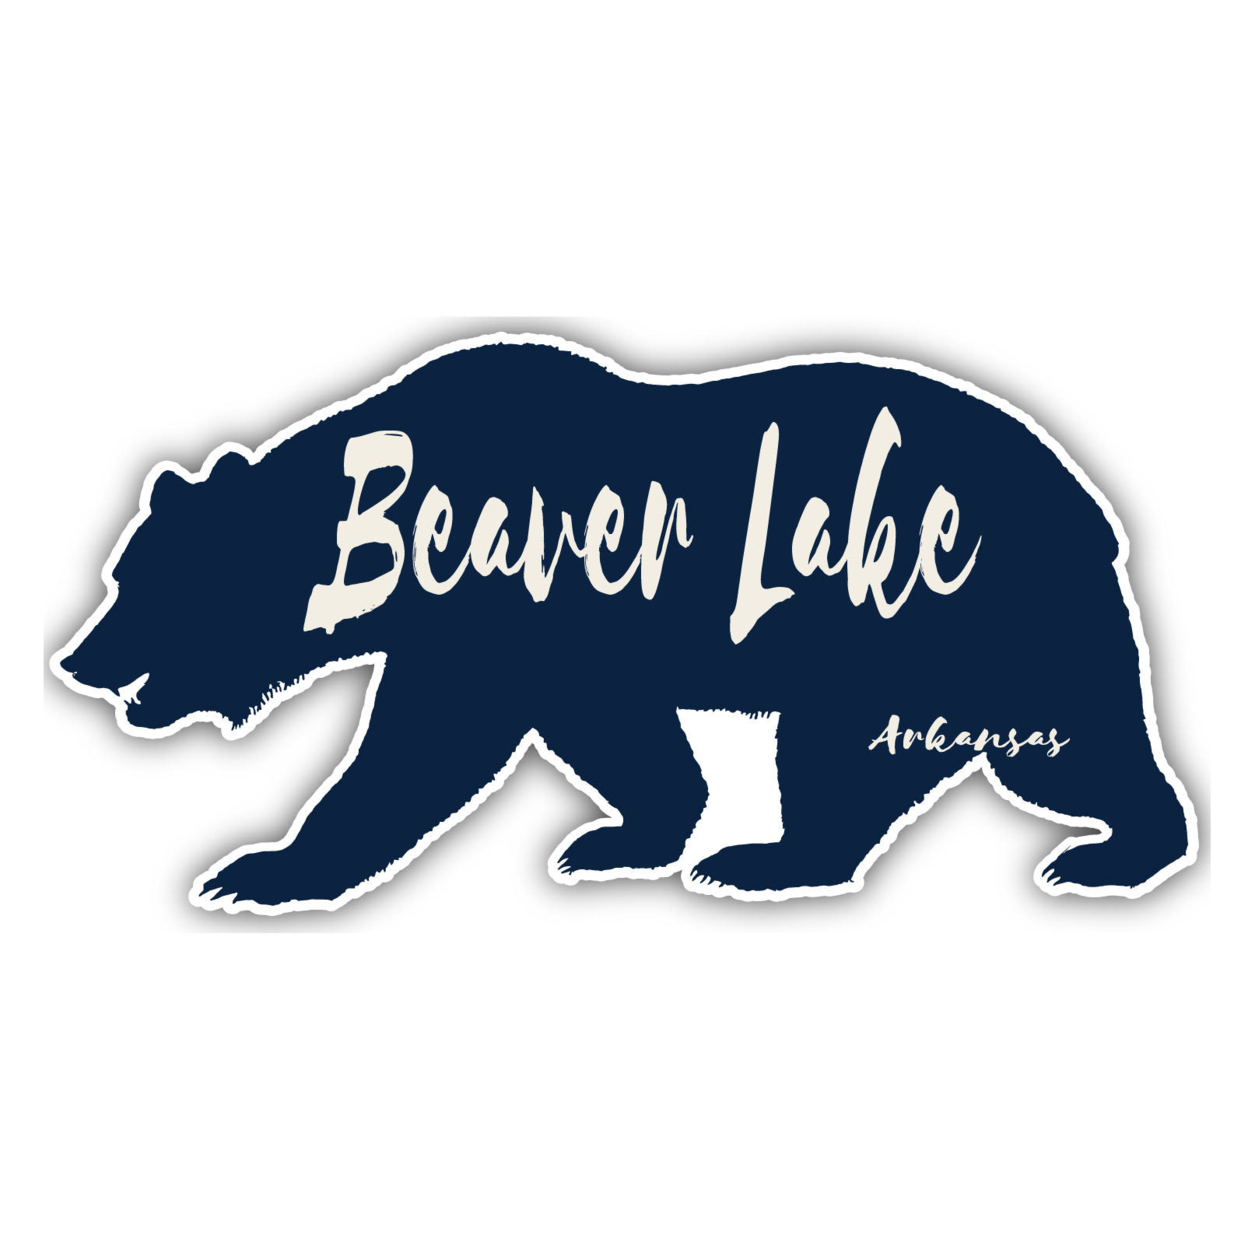 Beaver Lake Arkansas Souvenir Decorative Stickers (Choose Theme And Size) - Single Unit, 6-Inch, Bear